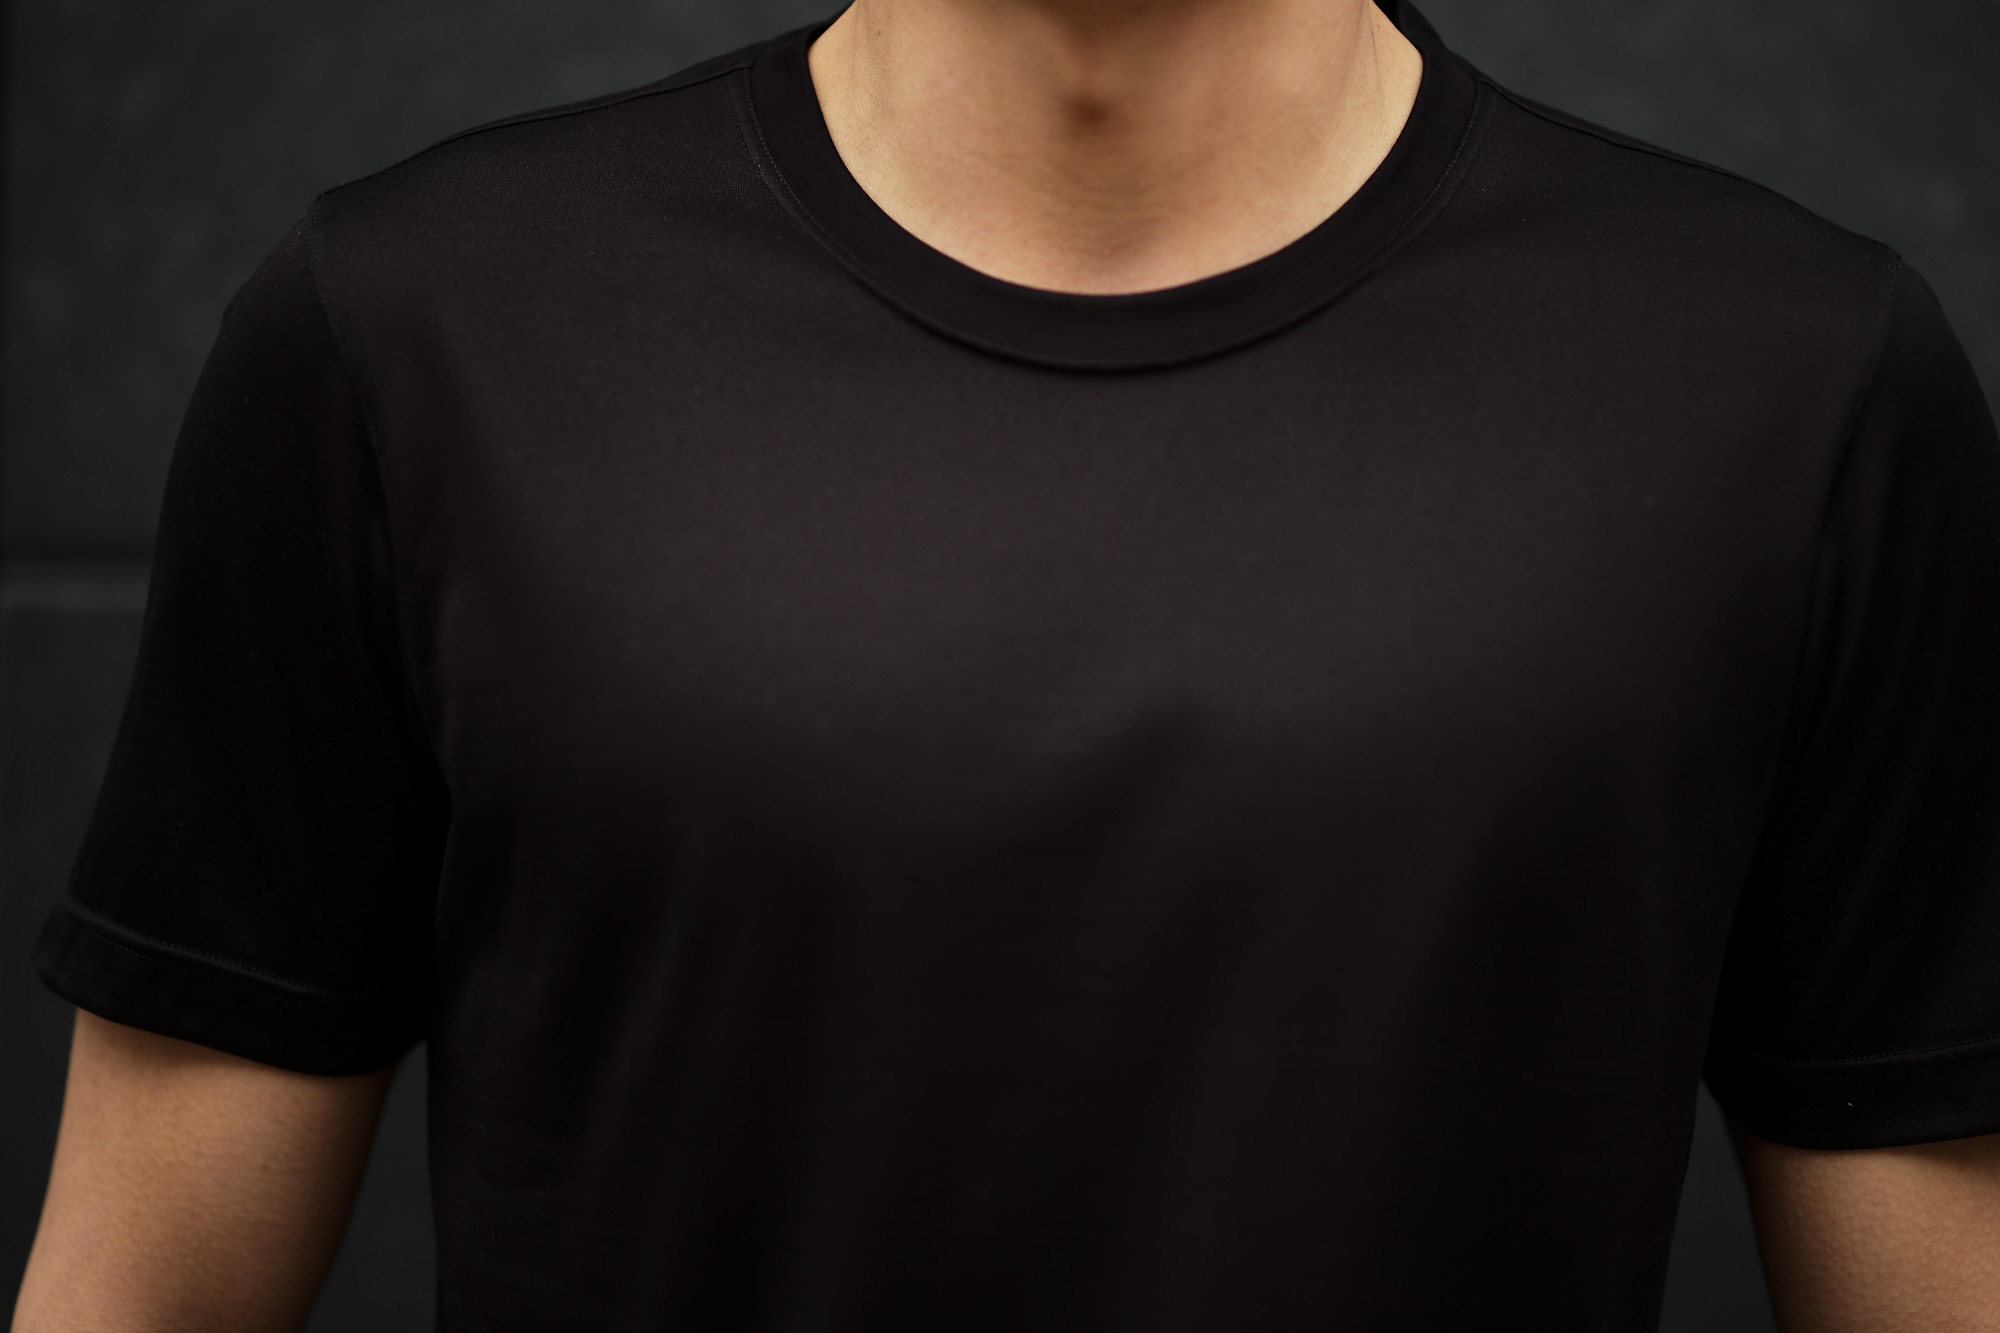 Gran Sasso (グランサッソ) Silk T-shirt (シルク Tシャツ) SETA (シルク 100%) ショートスリーブ シルク Tシャツ BLACK (ブラック・303) made in italy (イタリア製) 2020 春夏新作    愛知 名古屋 altoediritto アルトエデリット